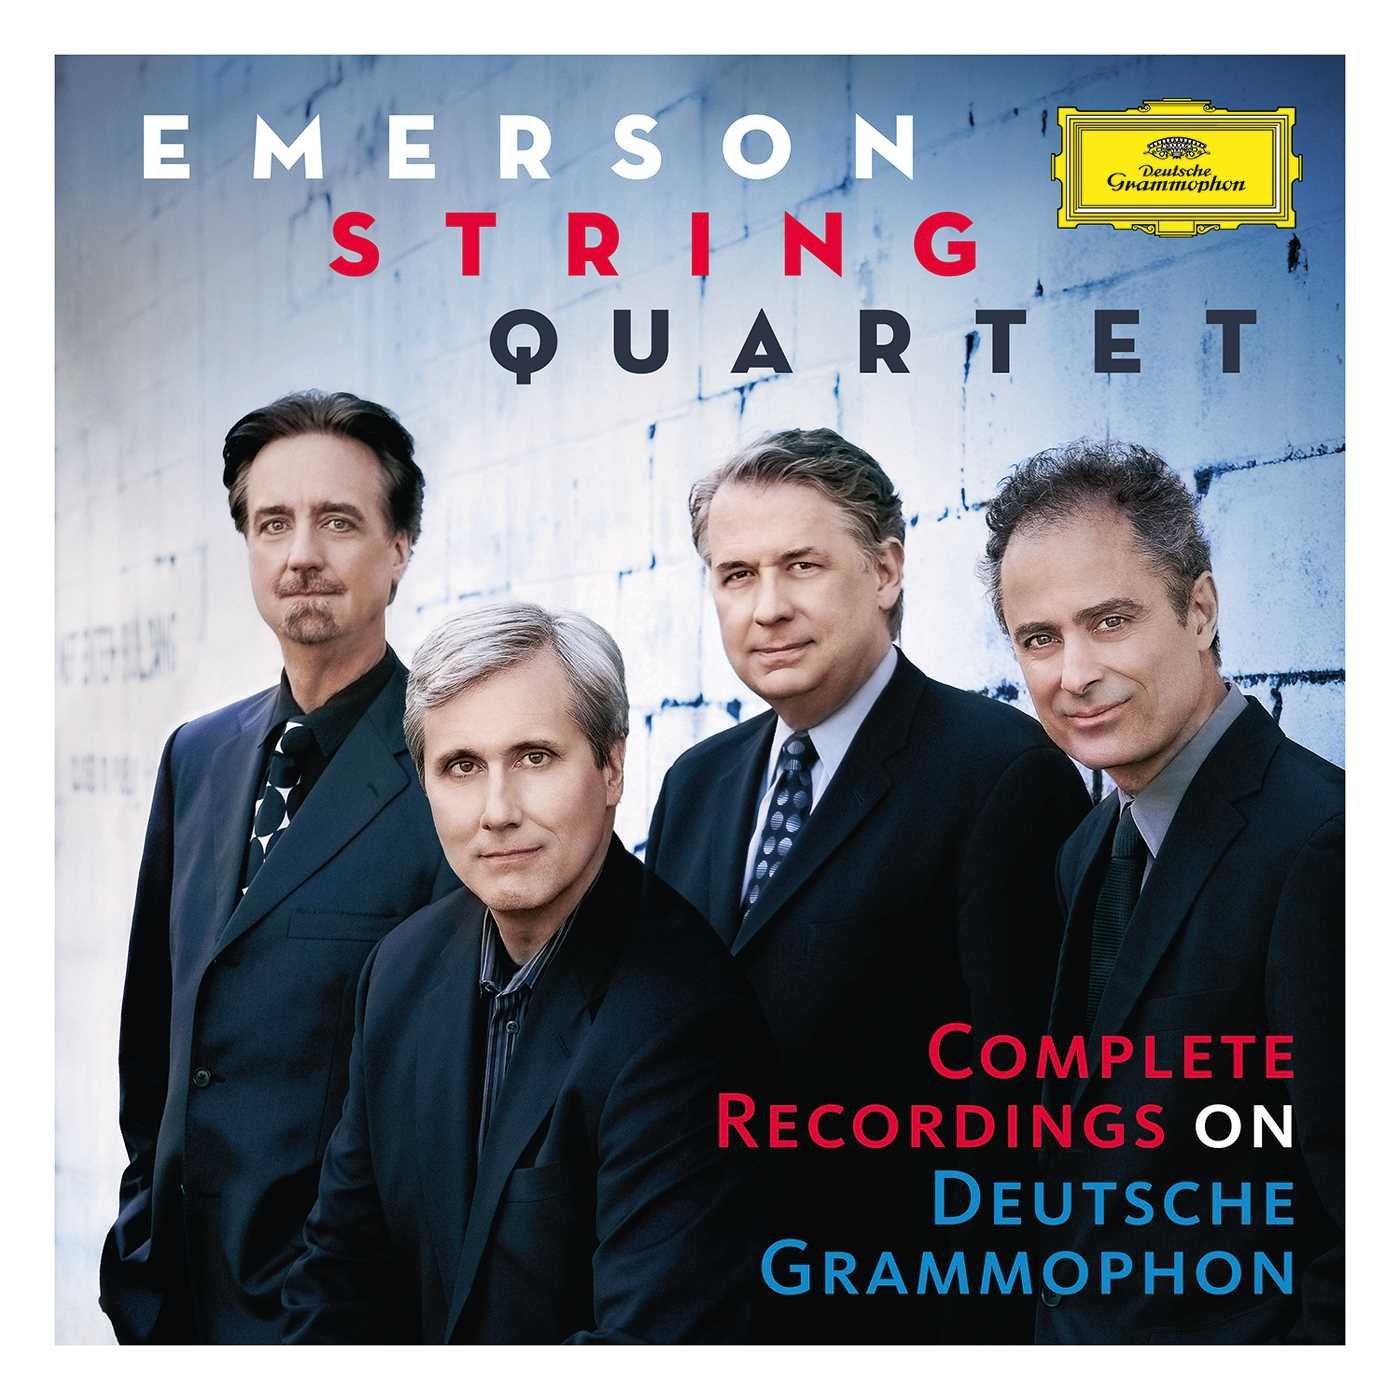 Emerson String Quartet Complete DG ed - 15Gb - 52cd